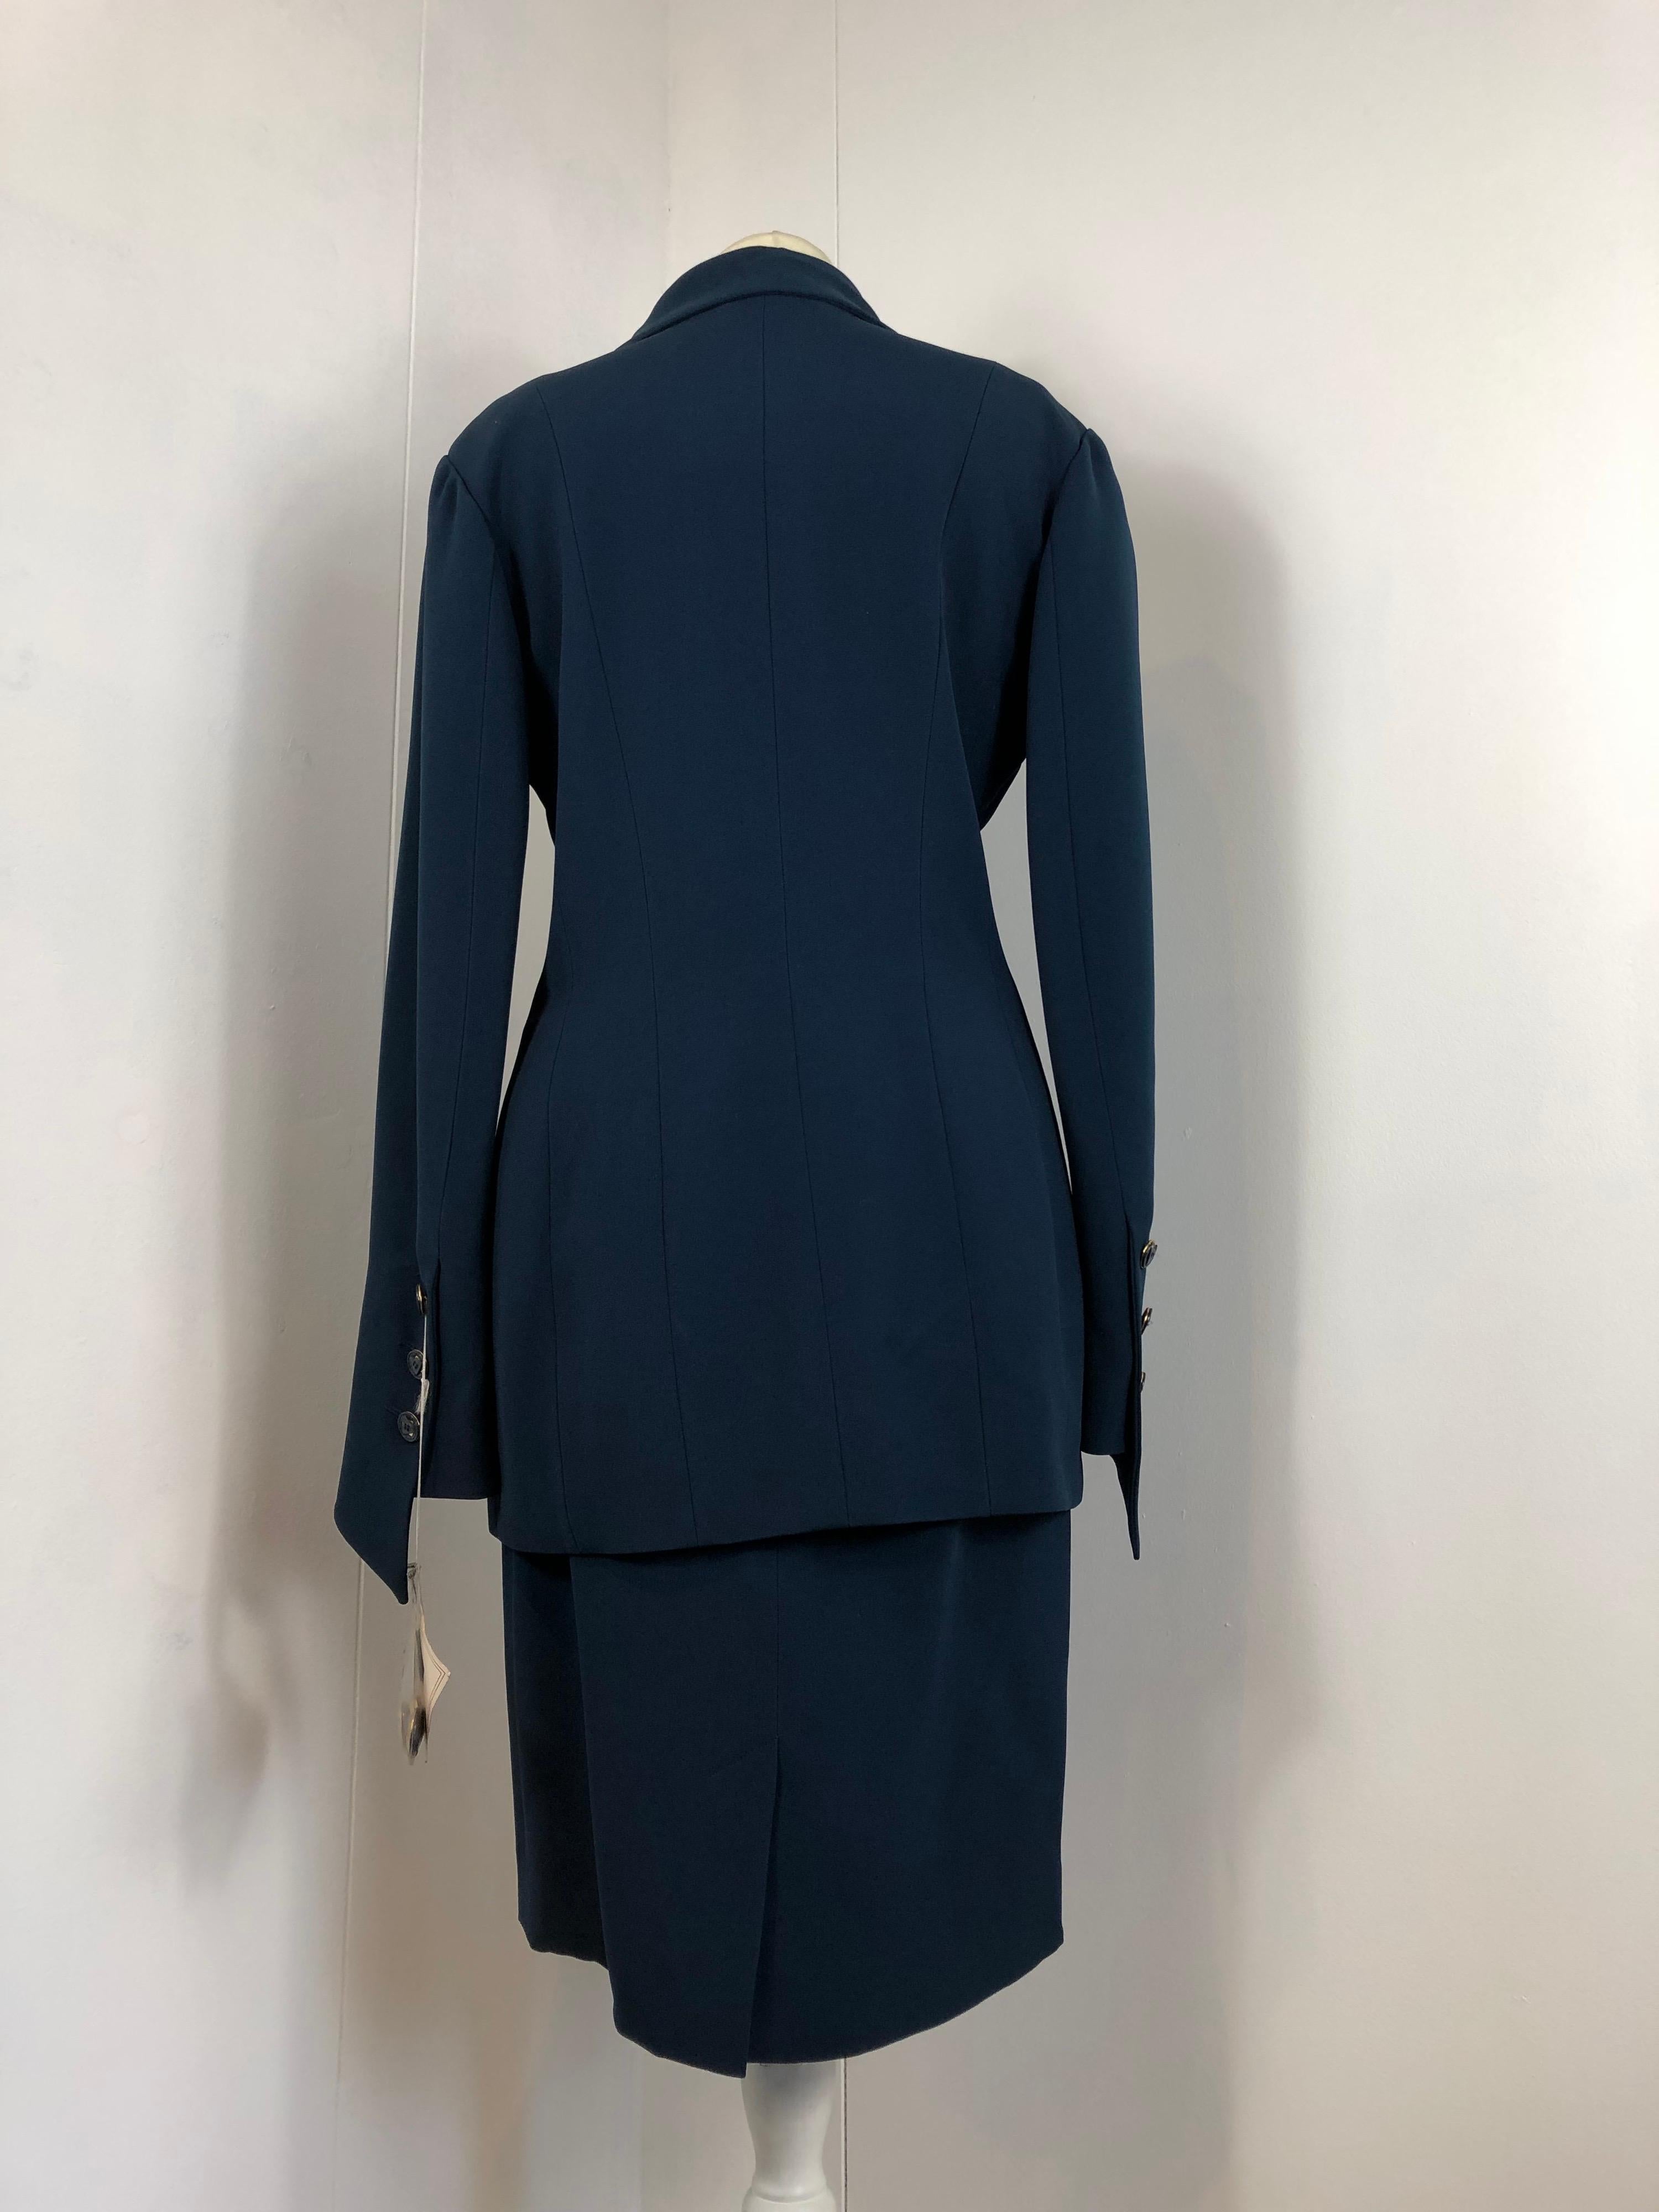 Women's Karl Lagerfeld avio blue suit  For Sale